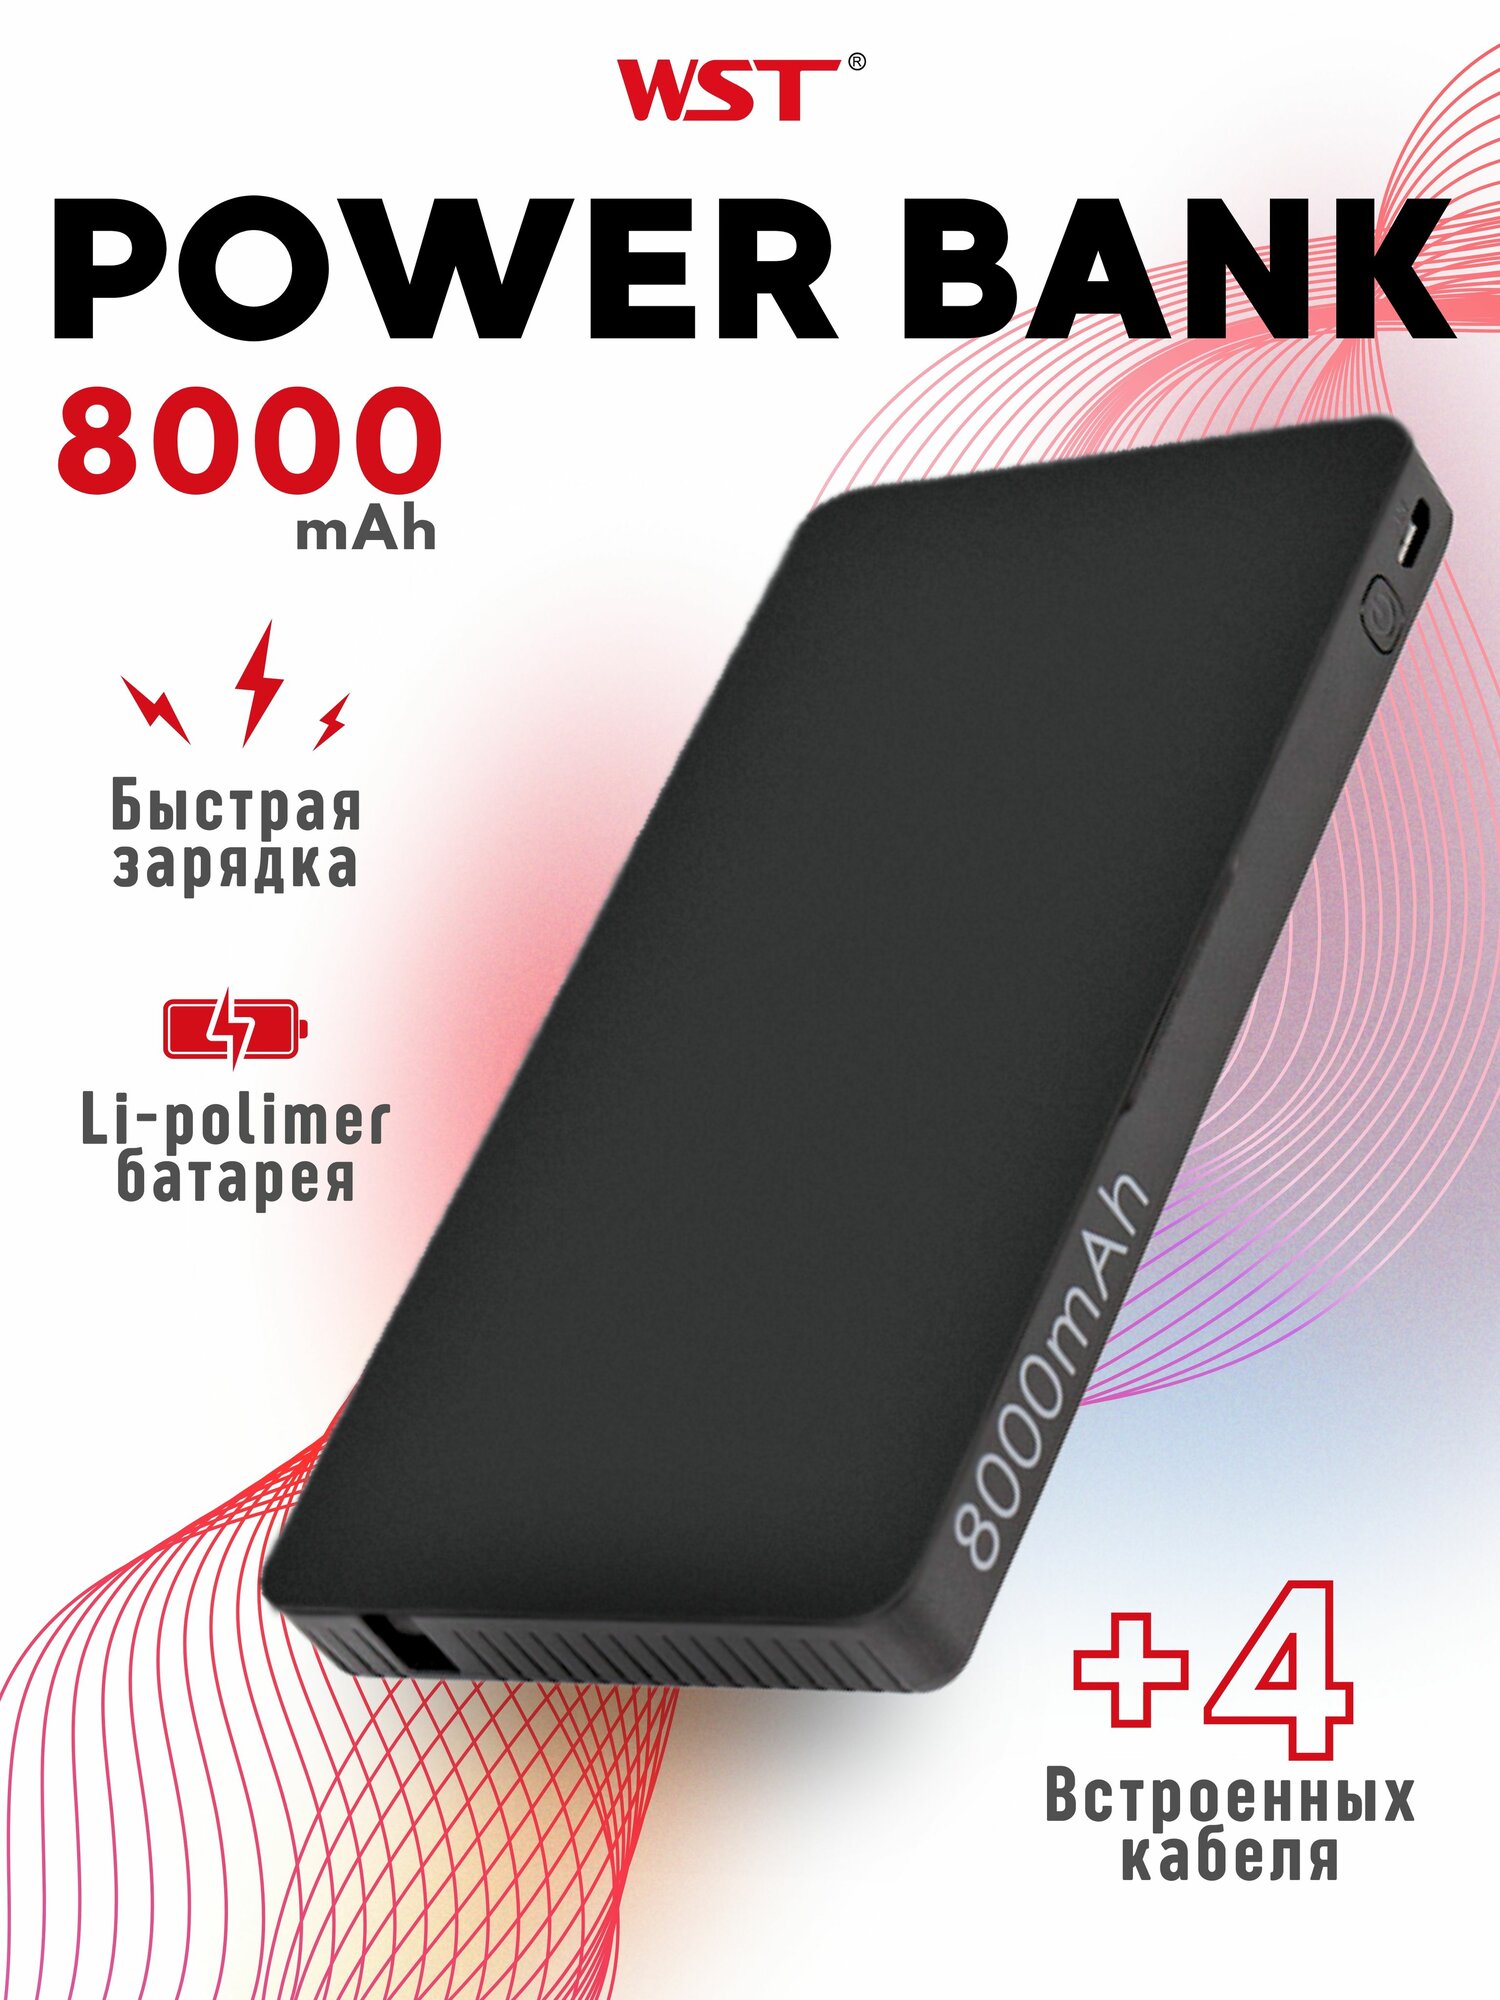 Power Bank Внешний аккумулятор WST WP932 8000 mAh (Встроенные провода type-c, micro usb, lighting)